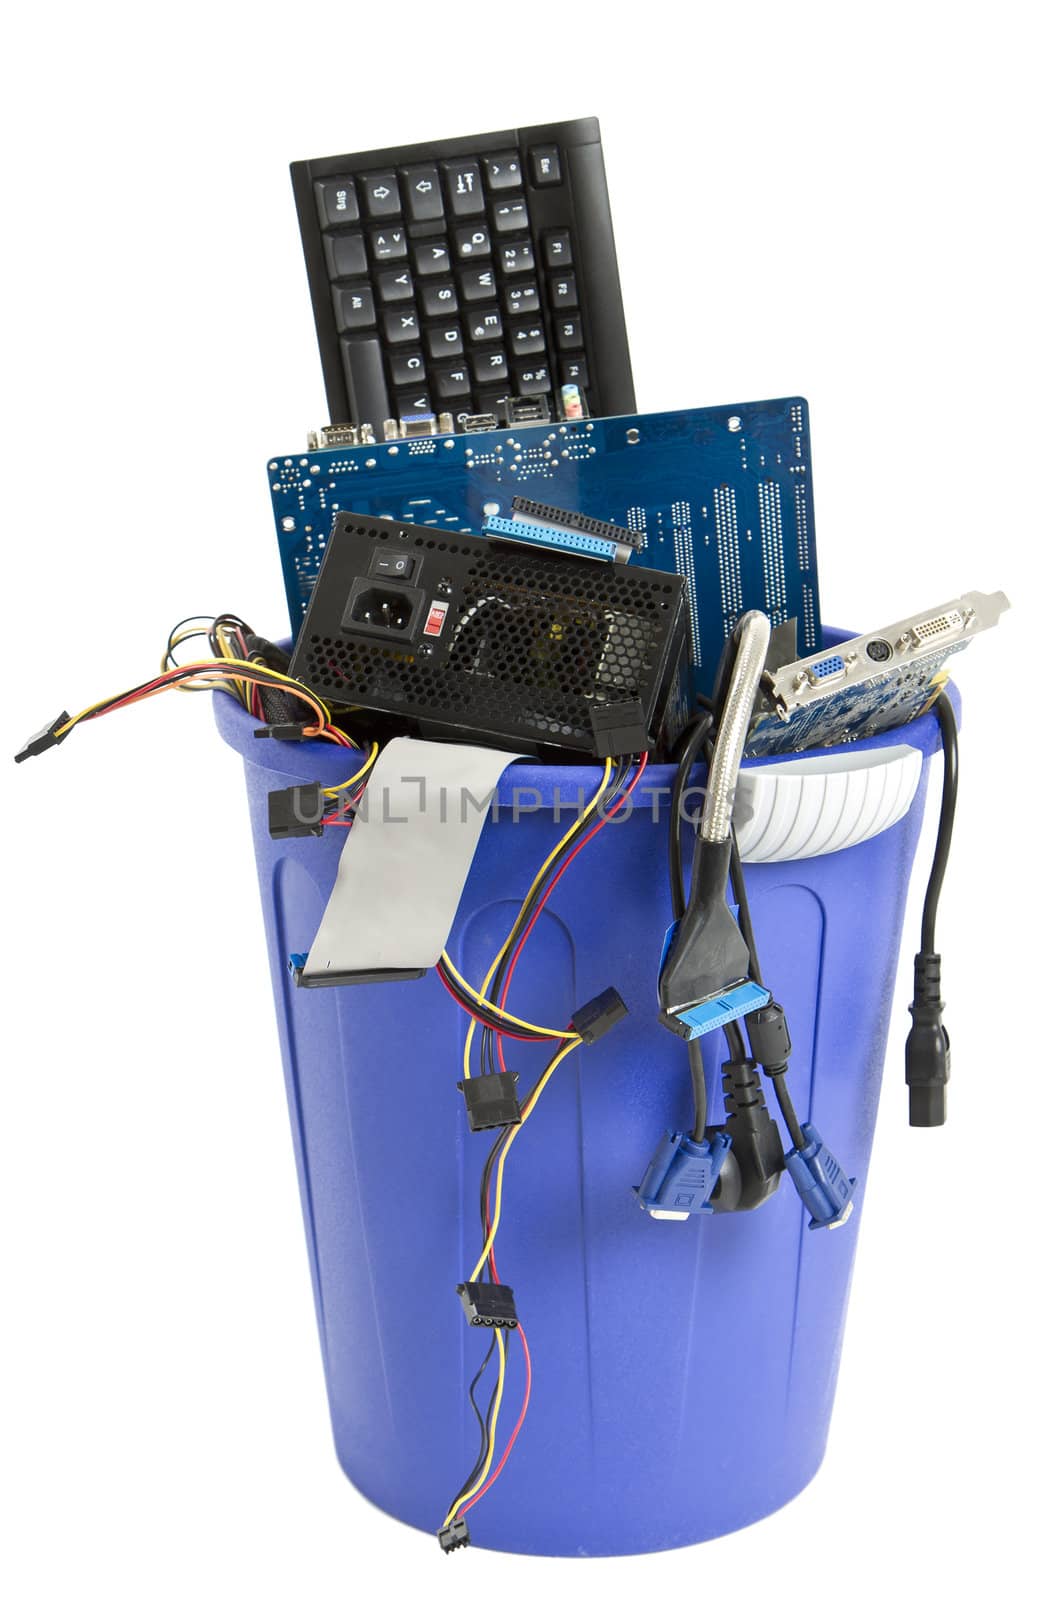 electronic scrap in blue trash can by gewoldi